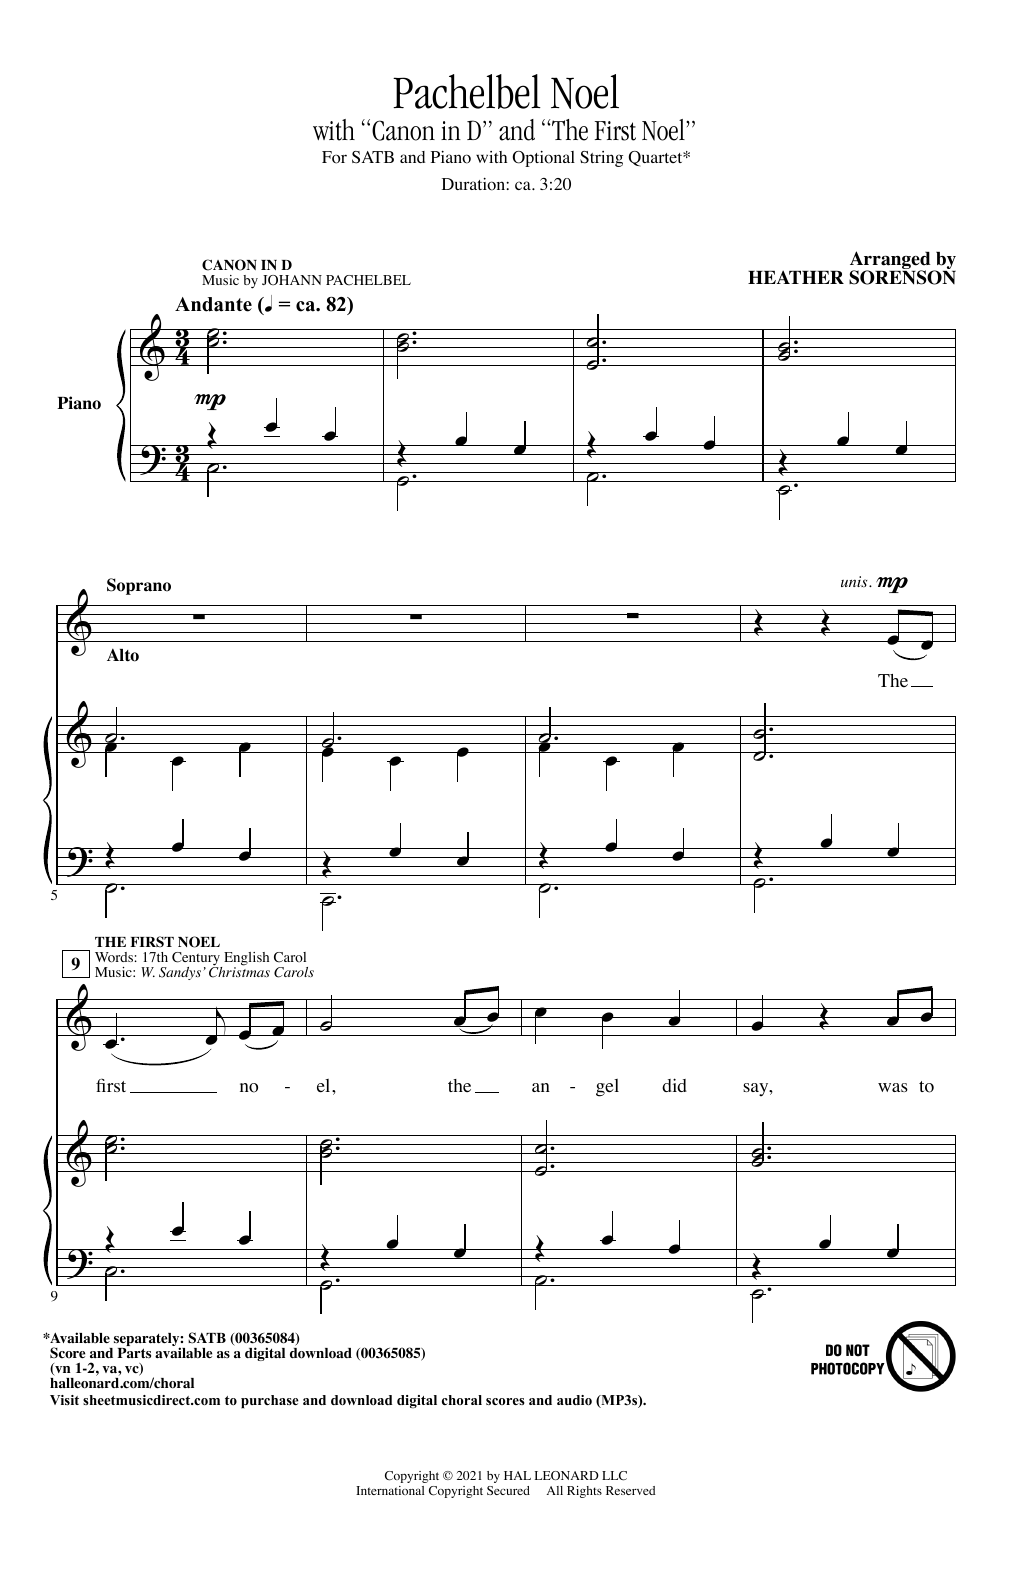 Johann Pachelbel Pachelbel Noel (arr. Heather Sorenson) Sheet Music Notes & Chords for SATB Choir - Download or Print PDF